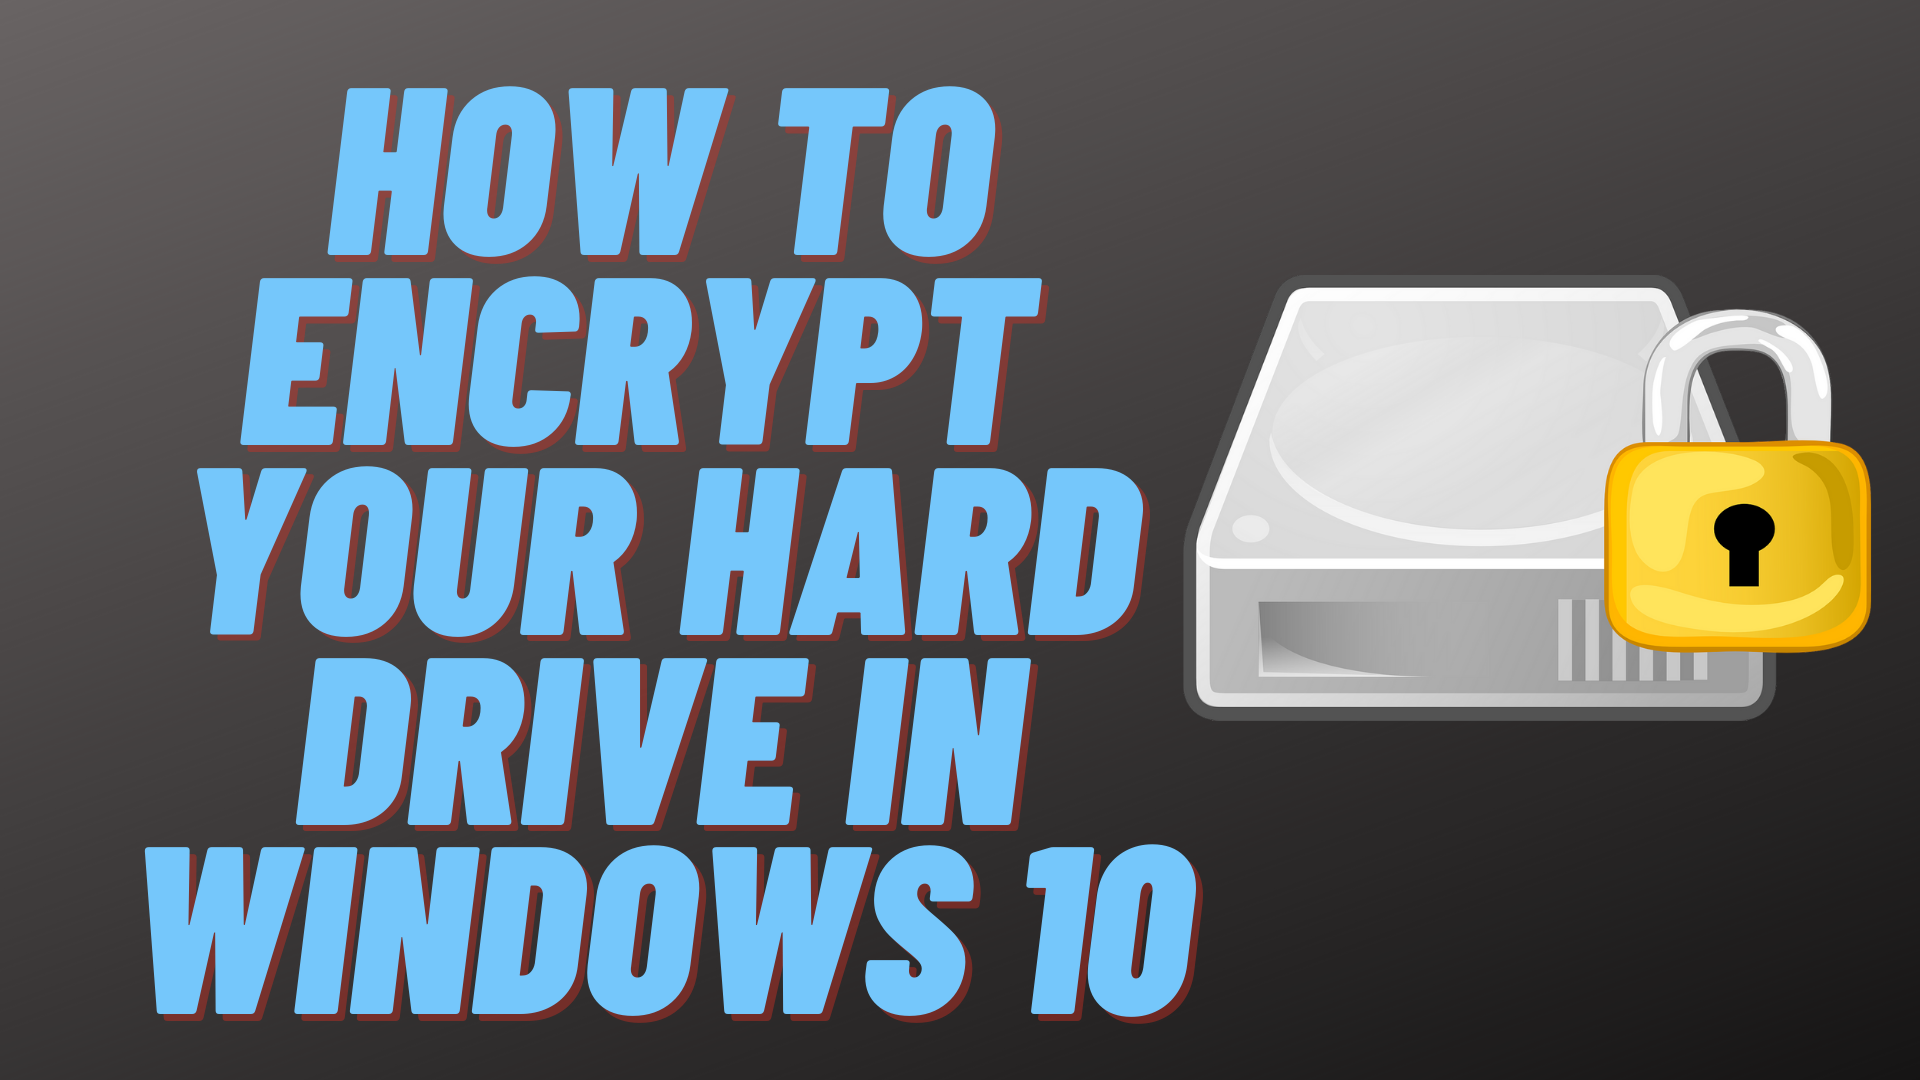 encrypt flash drive windows 10 home